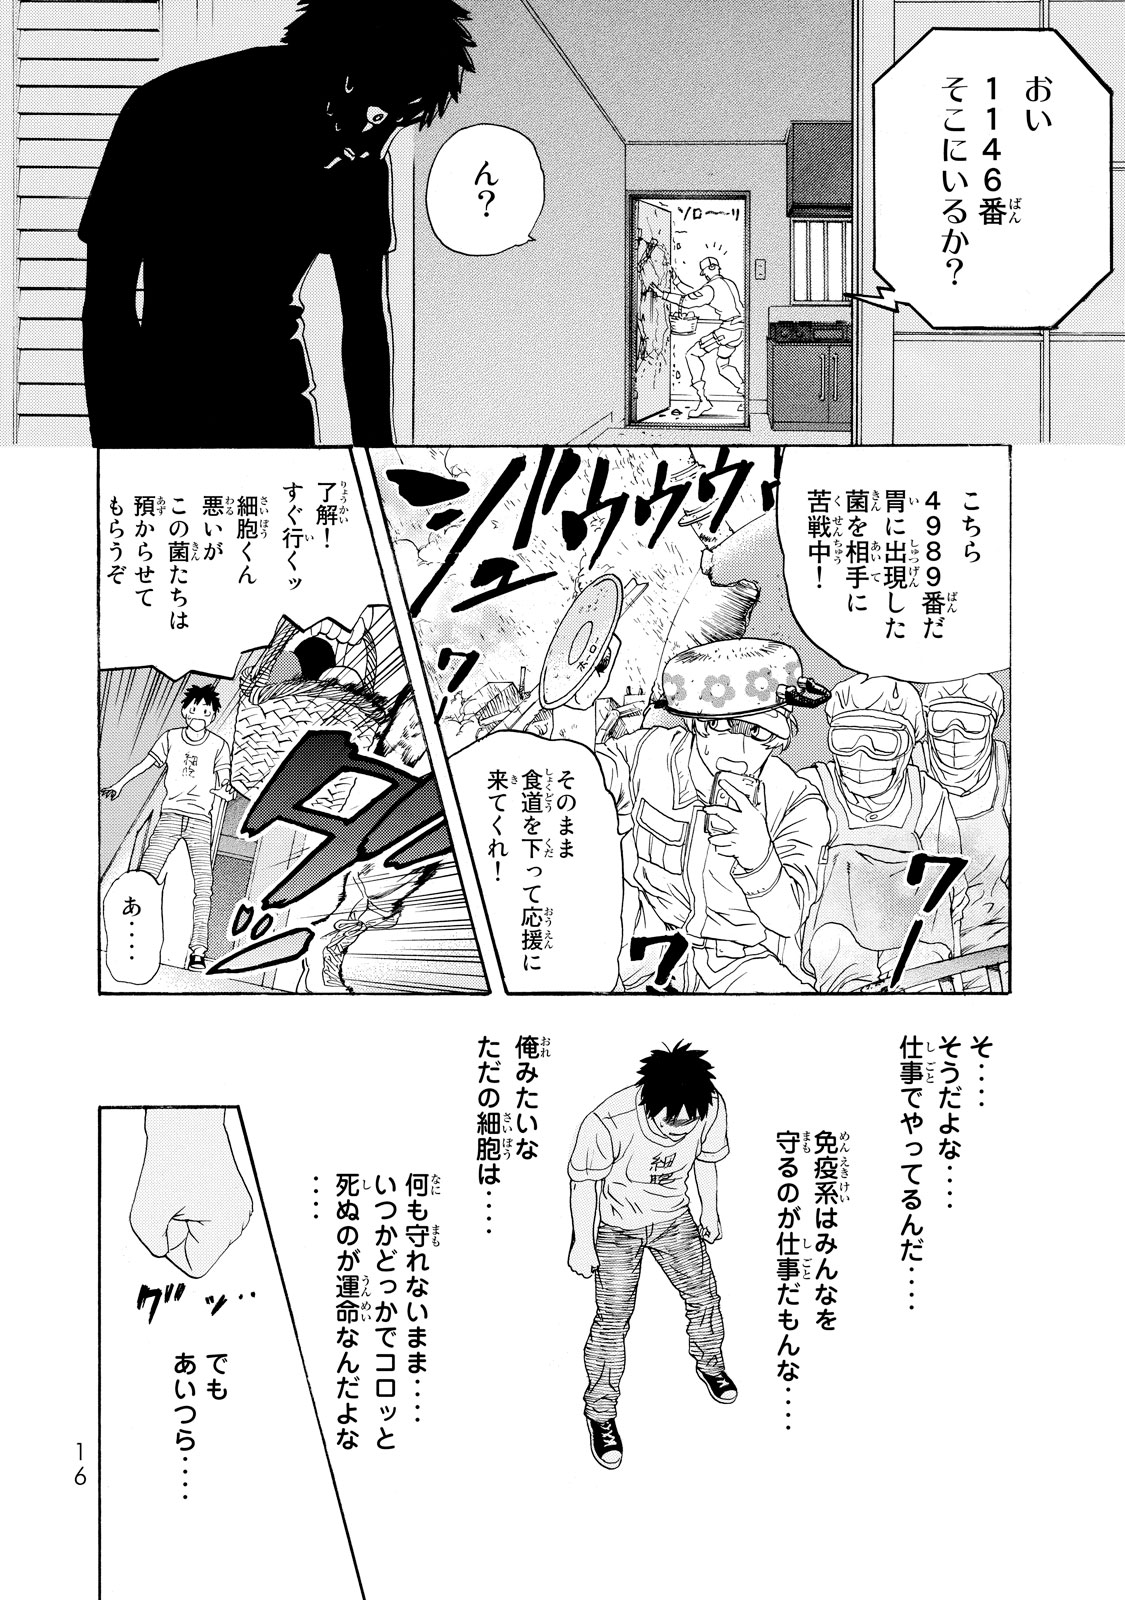 Hataraku Saibou - Chapter 20 - Page 18